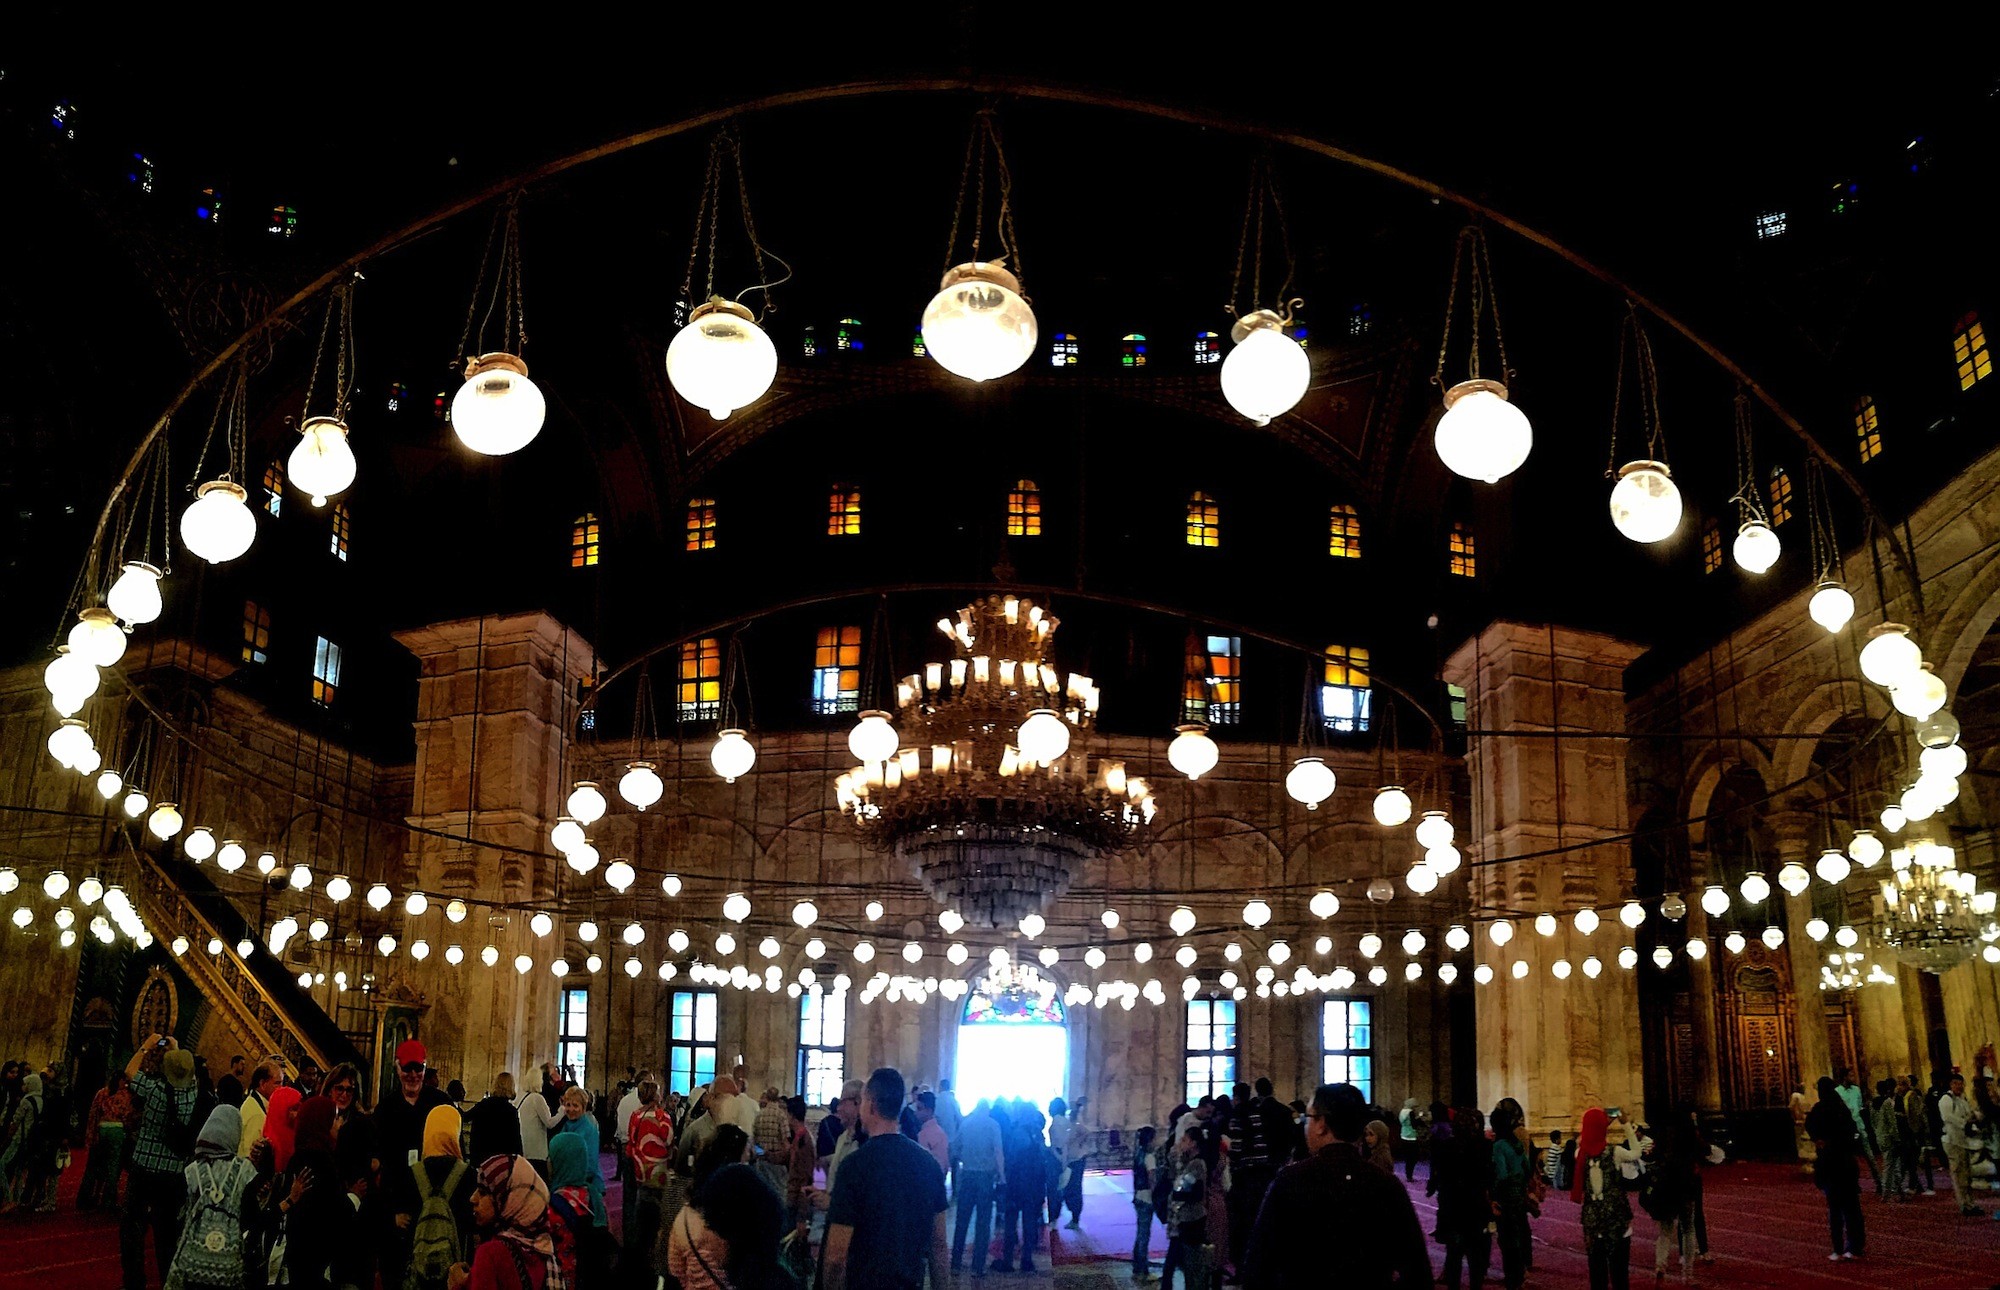 Muhammad Ali清真寺里面的吊灯很特别，这里采用彩色玻璃窗花，给人一种欧式混合的建筑感觉。